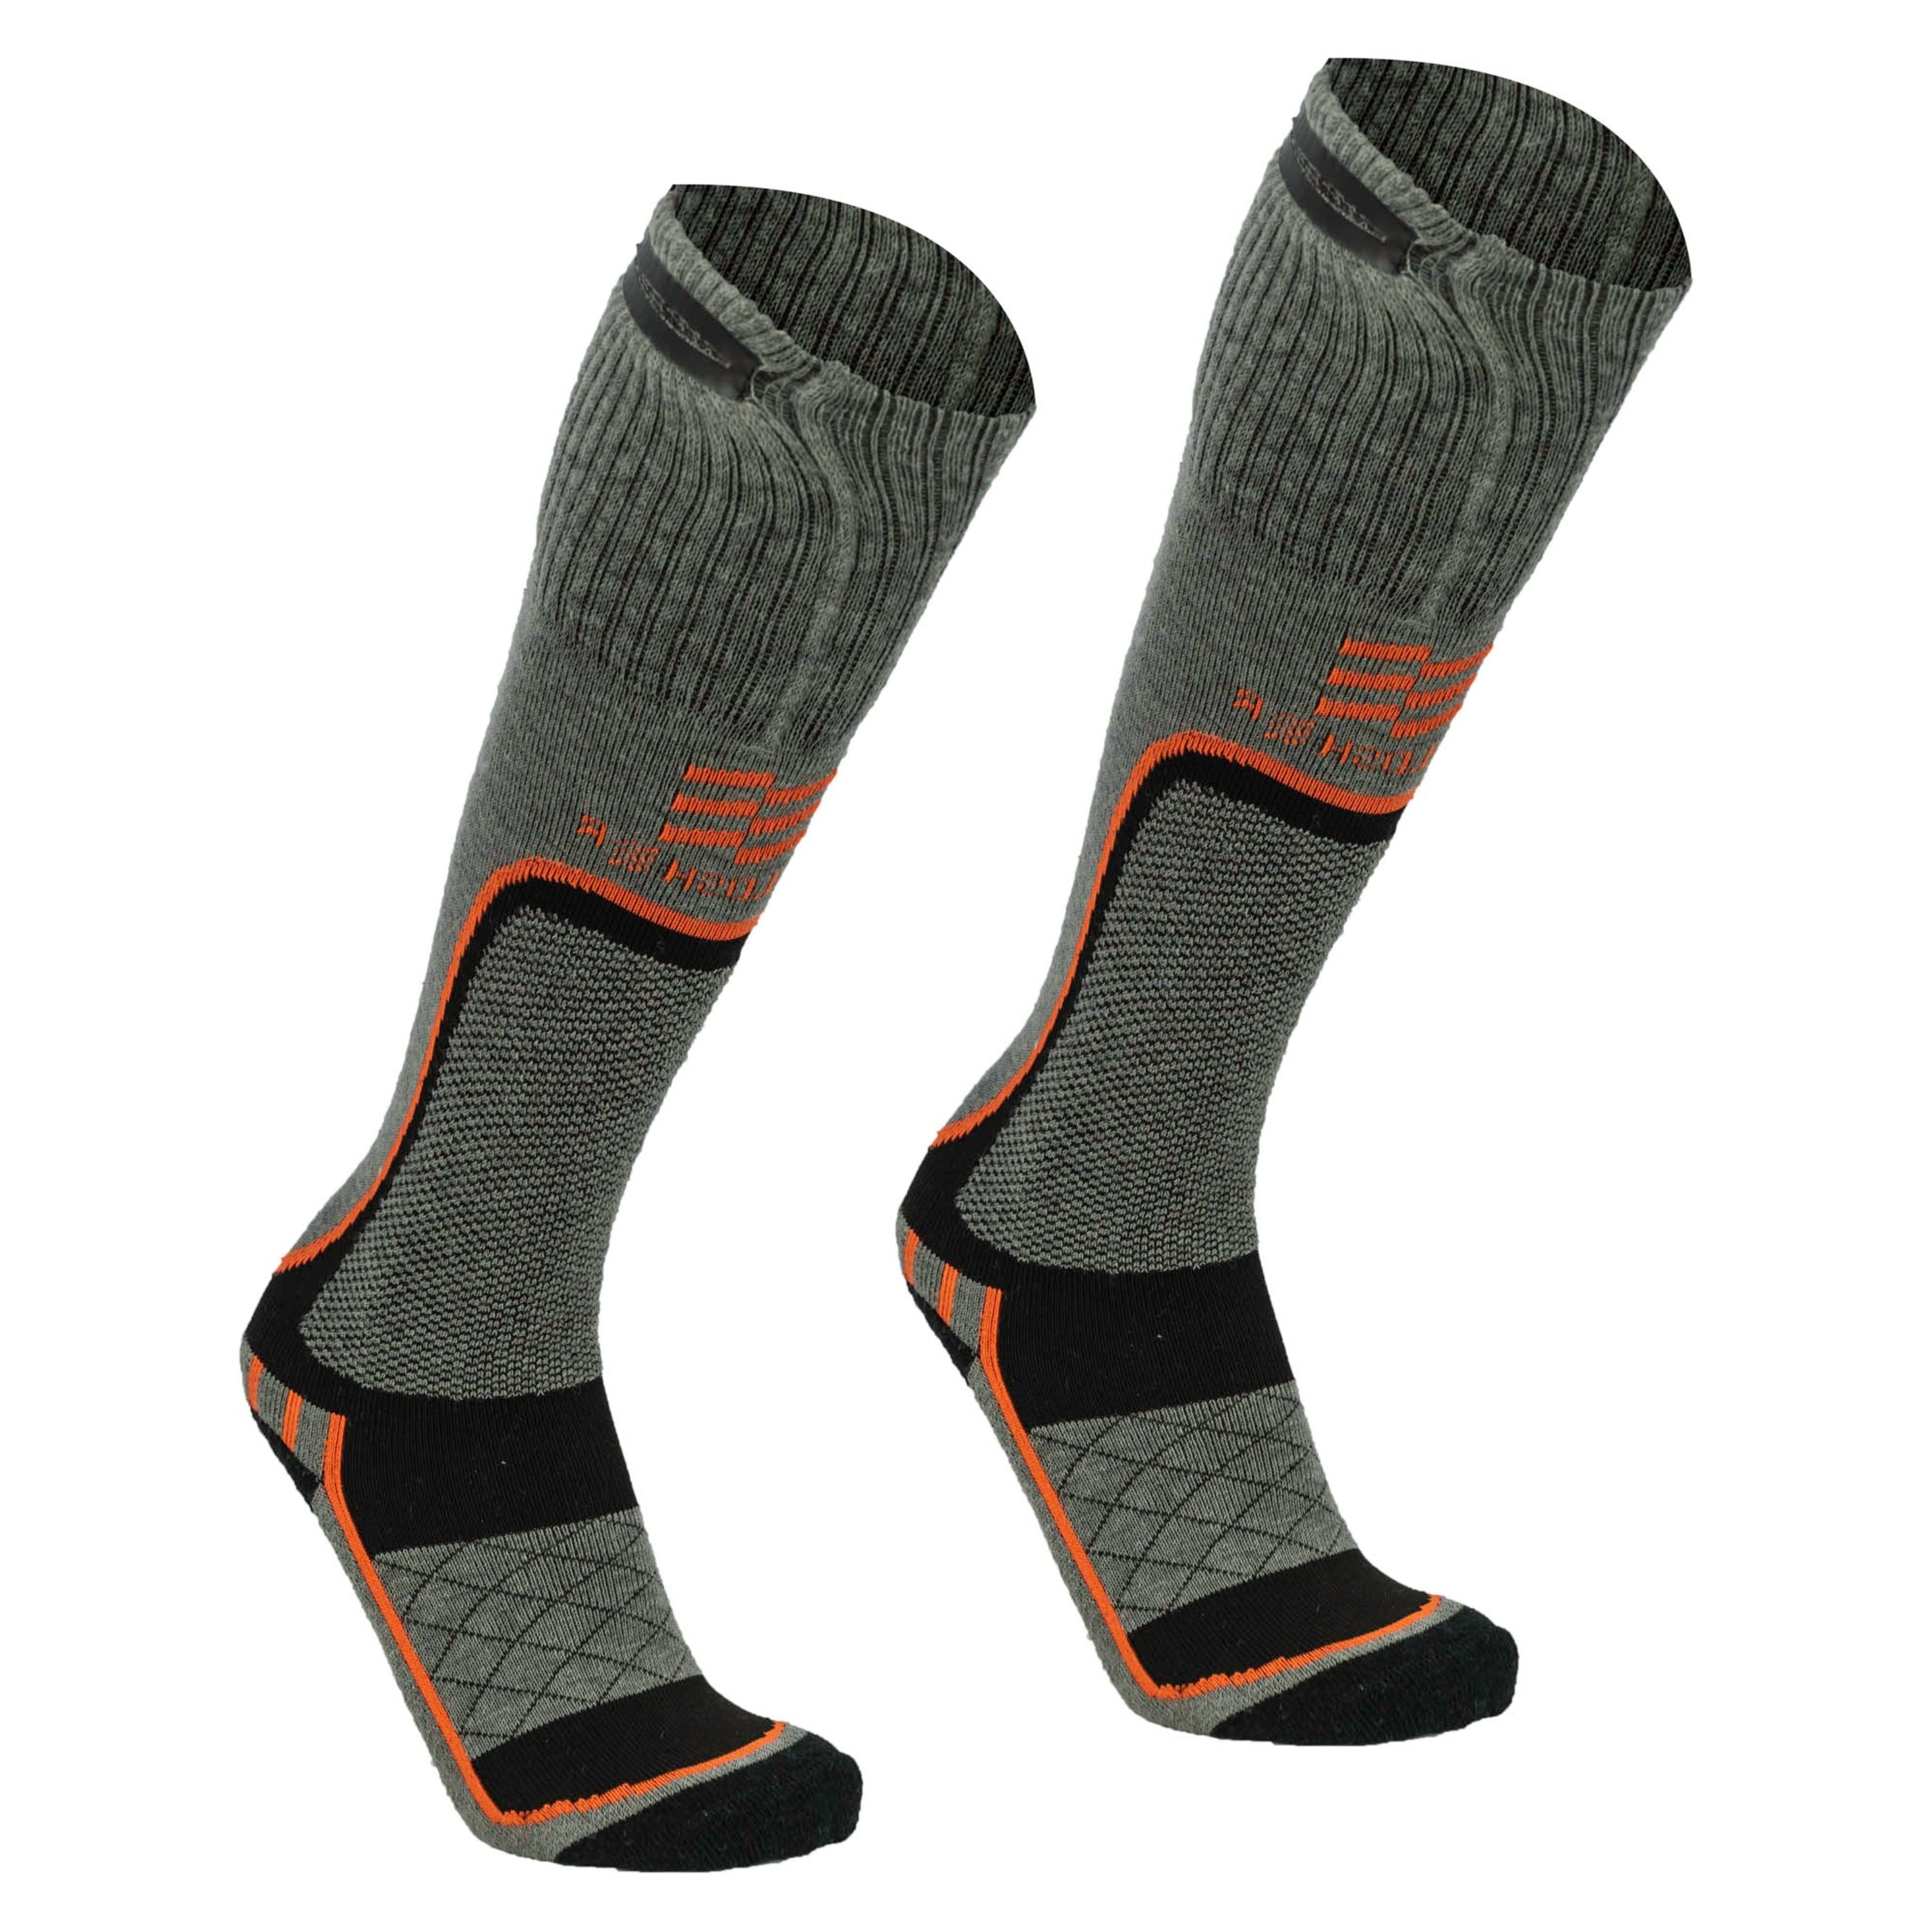 Chaussettes chauffantes mérinos "Premium 2,0" - Homme||"Premium 2.0"Merino heated socks - Men's